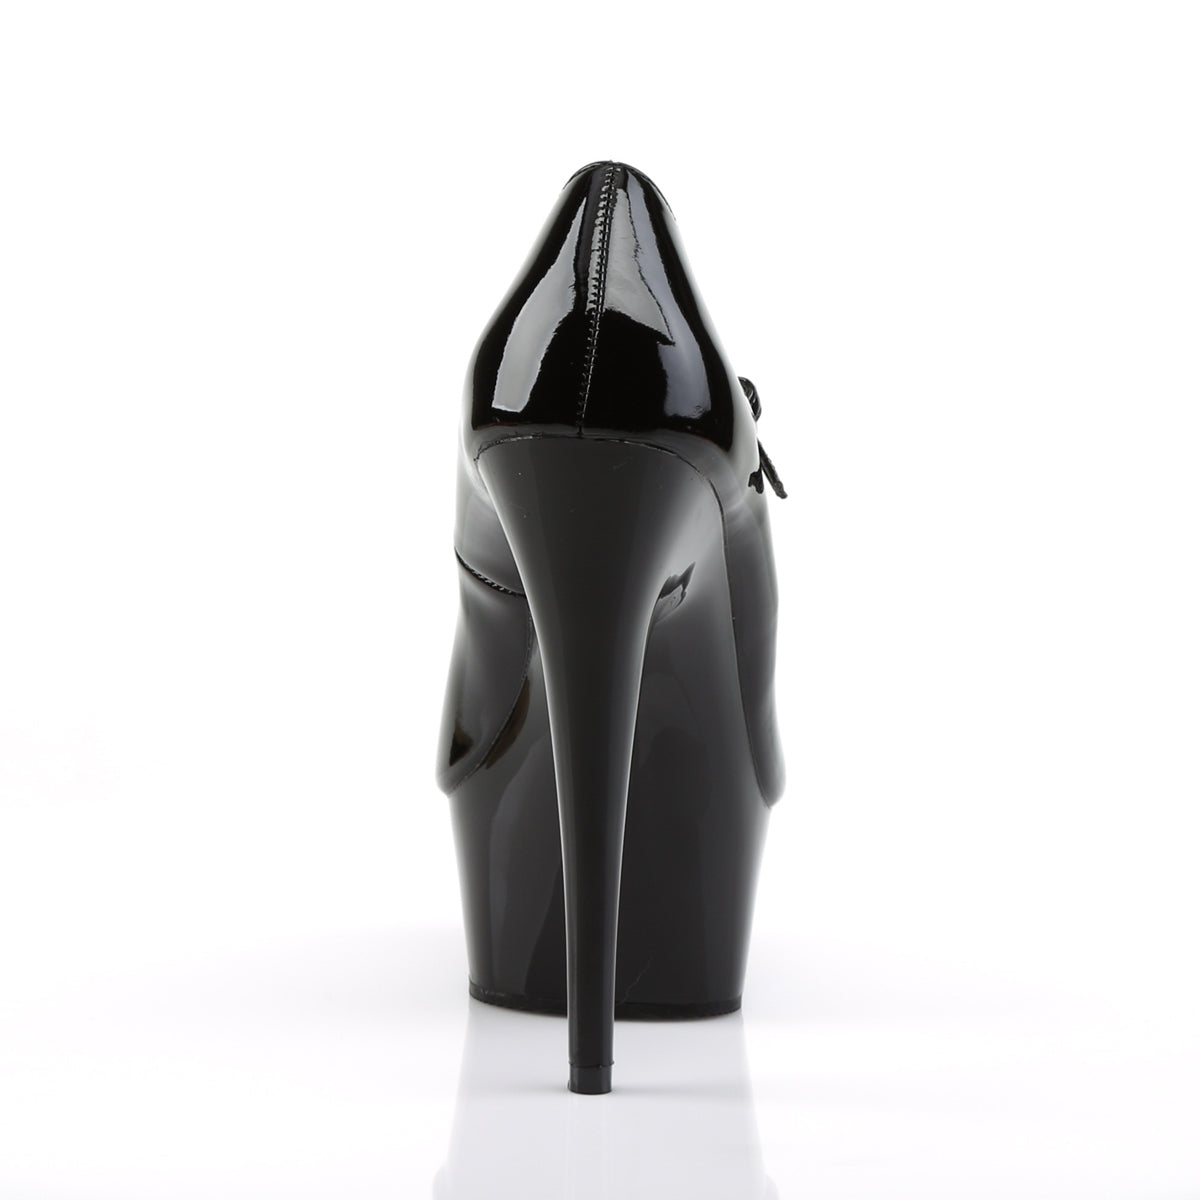 DELIGHT-687 6" Heel Black Patent Pole Dancing Platforms-Pleaser- Sexy Shoes Fetish Footwear